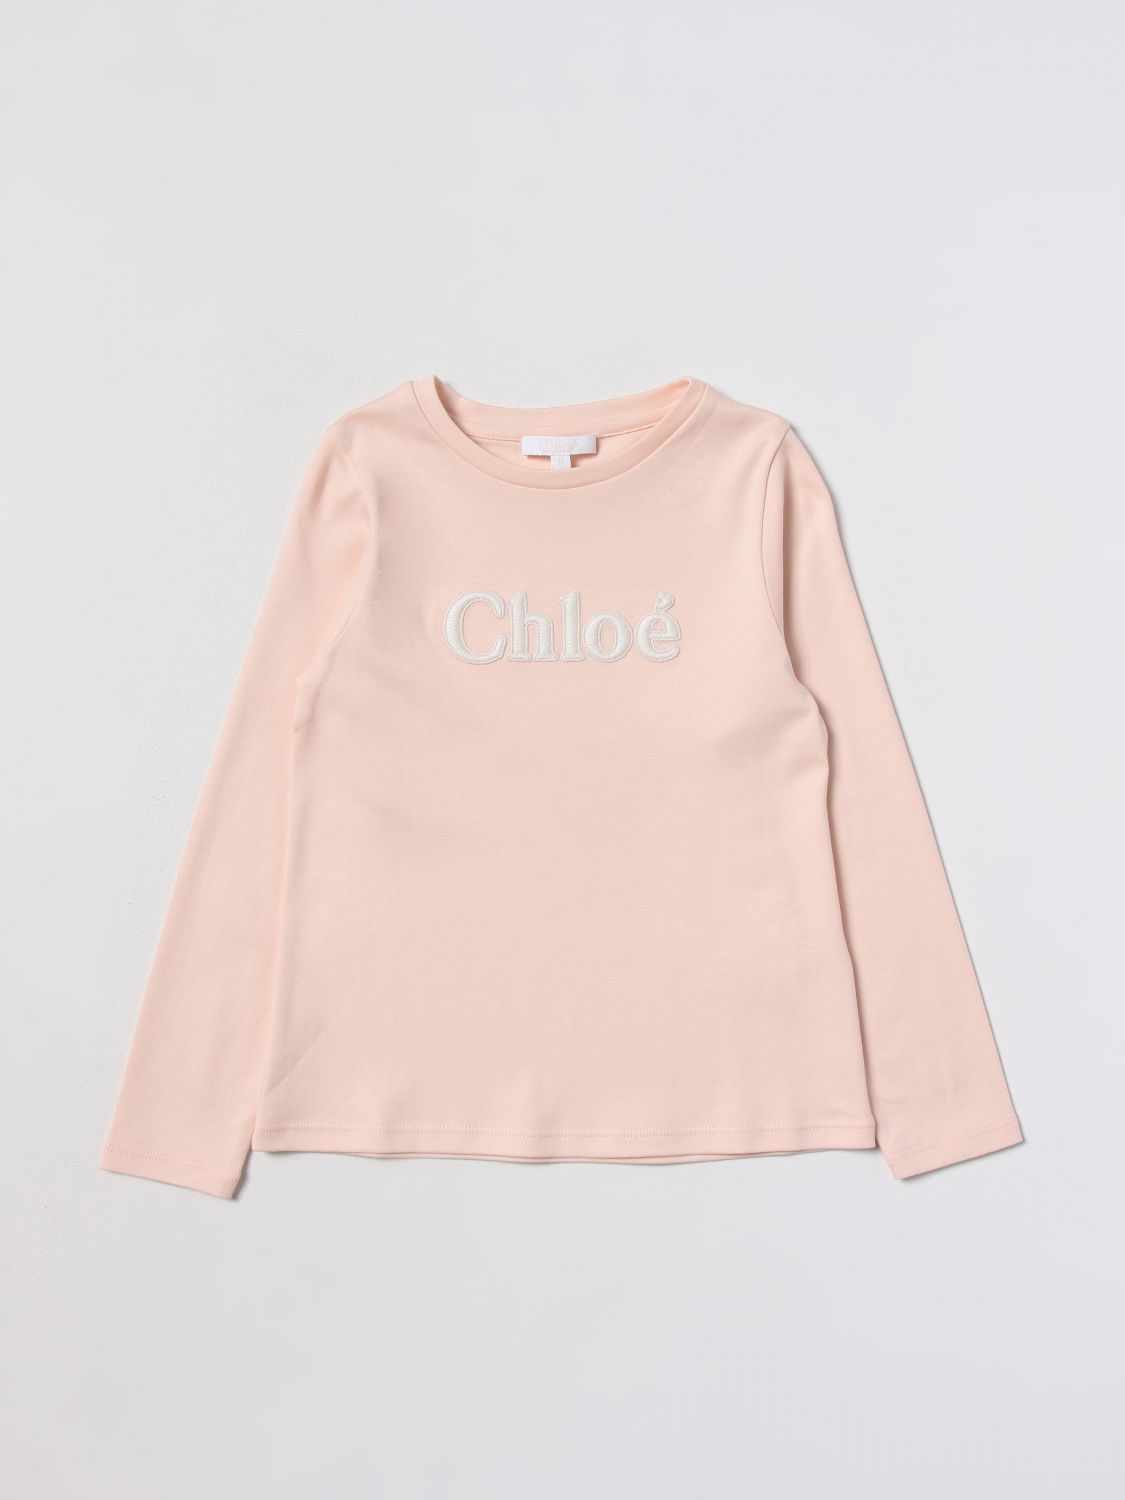 Chloé Kids' Cotton T-shirt In Pink